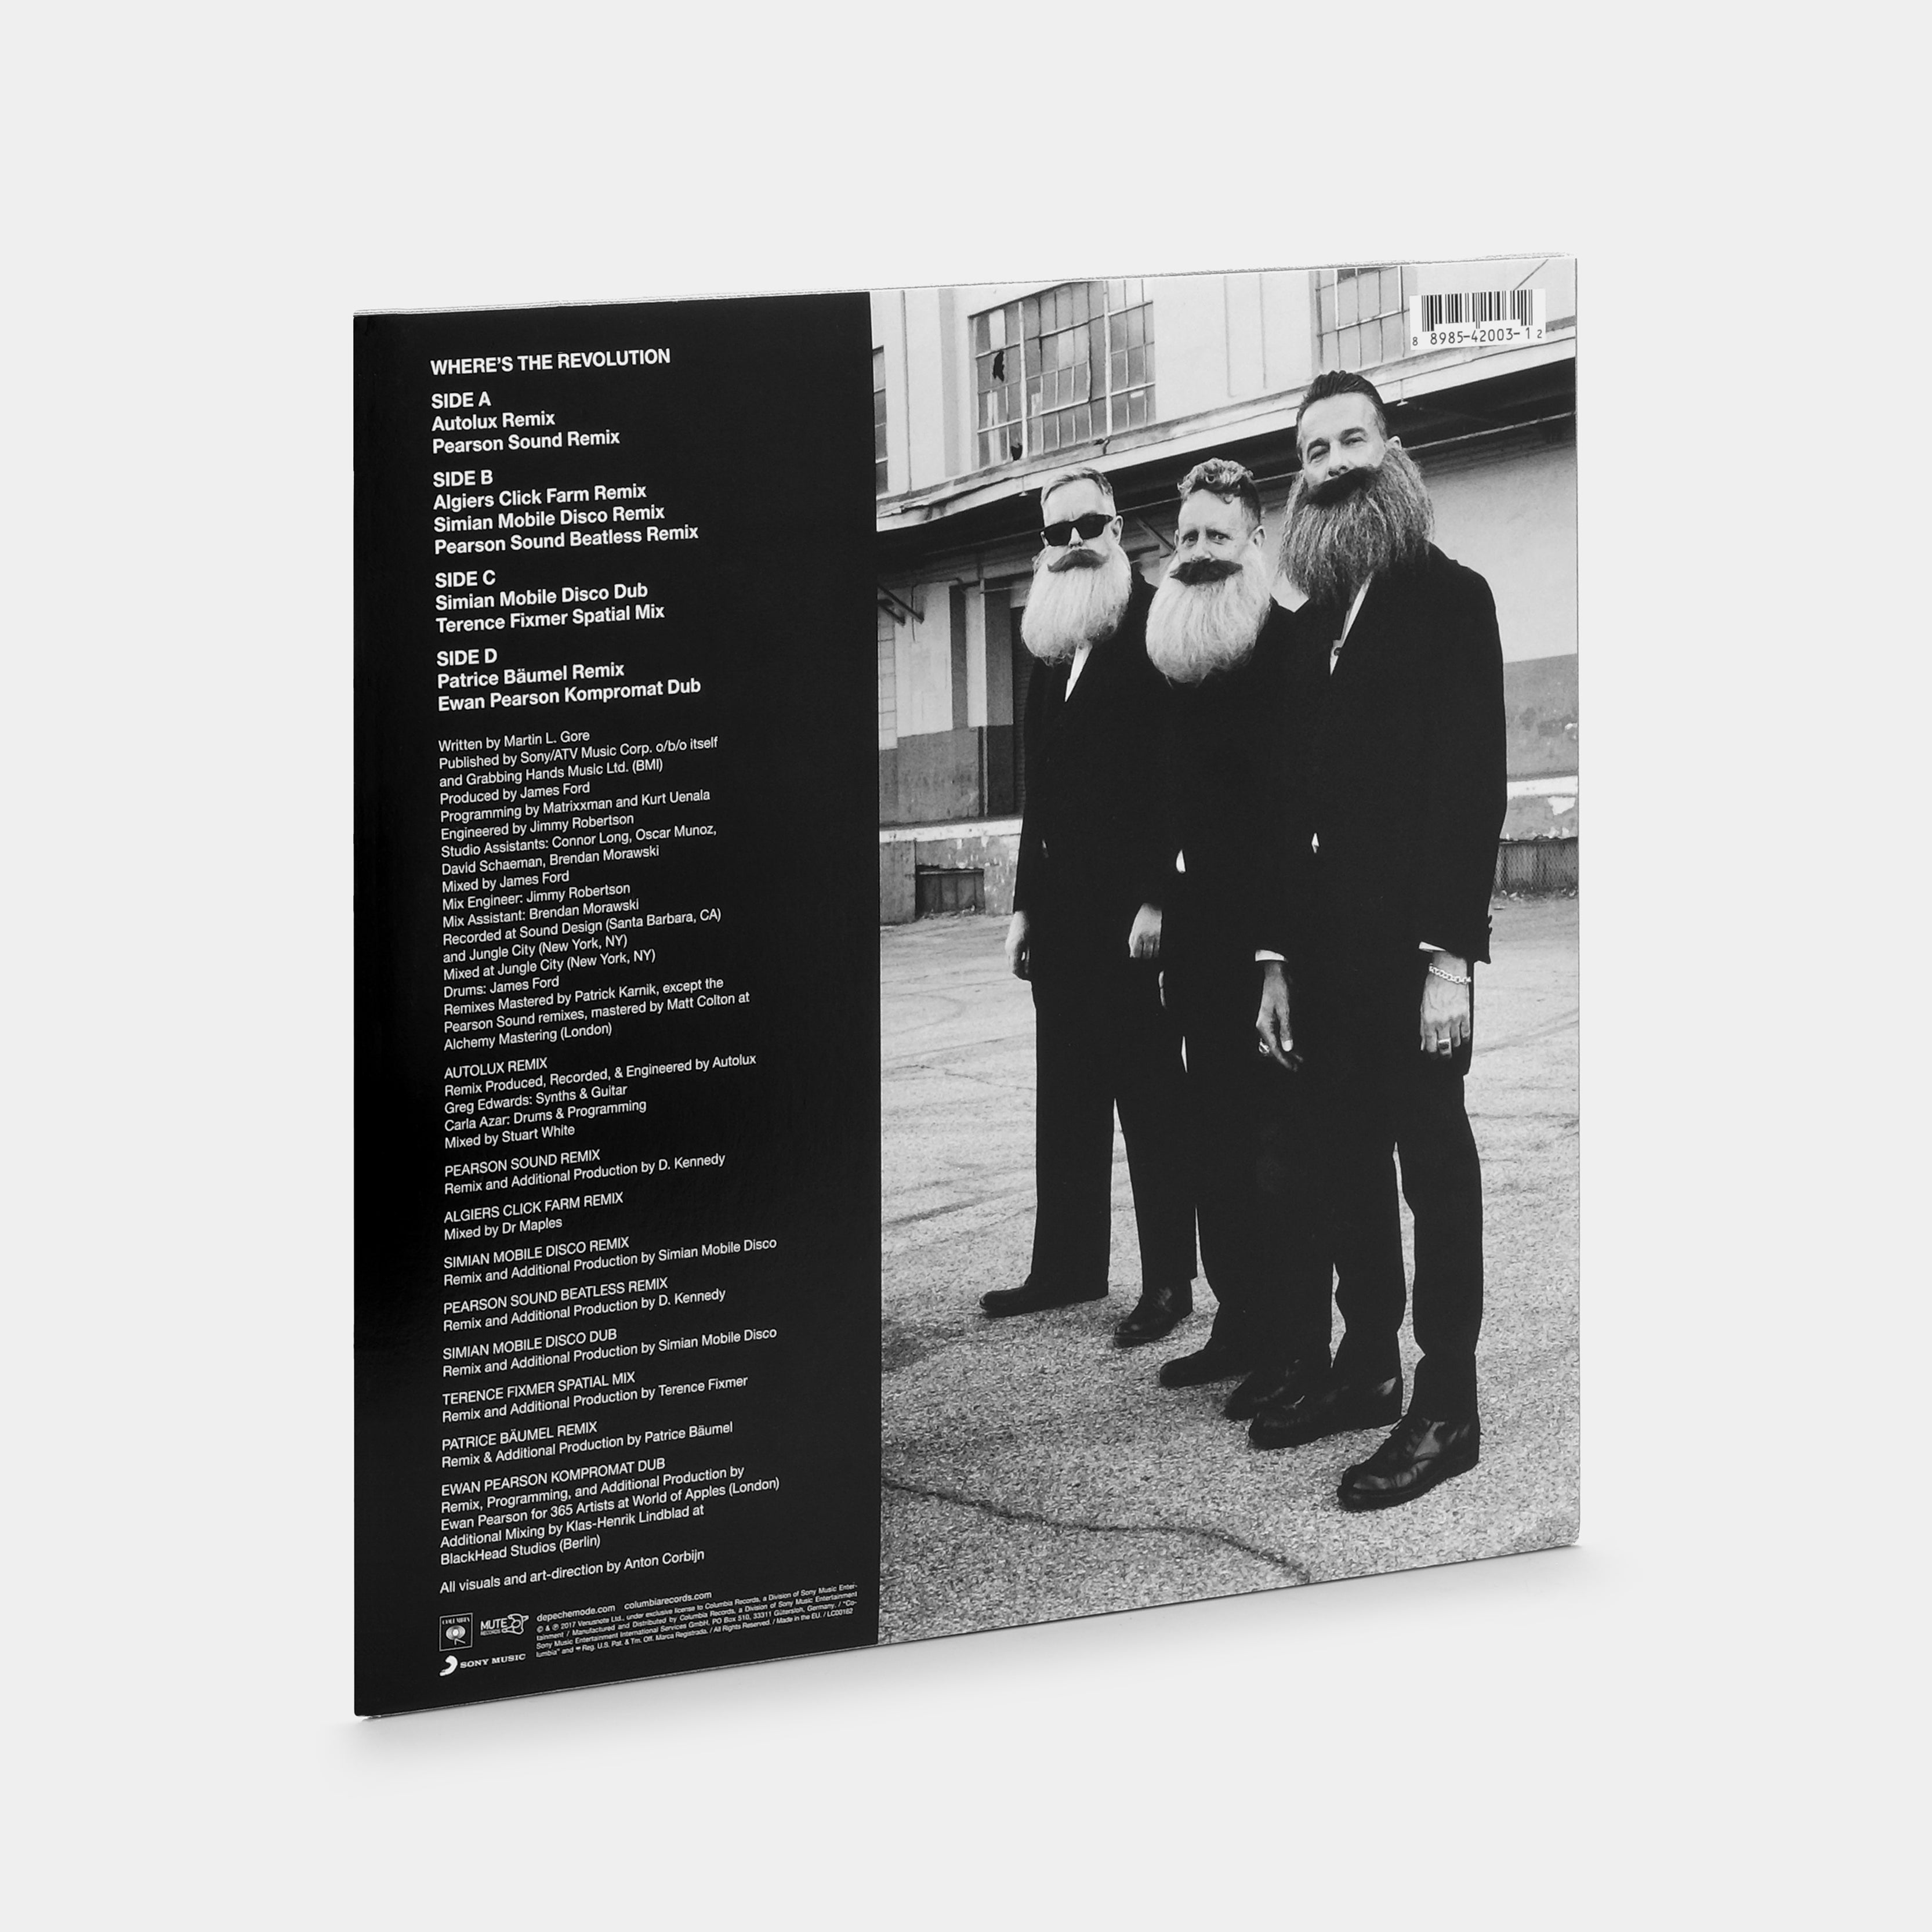 Depeche Mode - Where's The Revolution (Remixes) 2x12" Single Vinyl Record